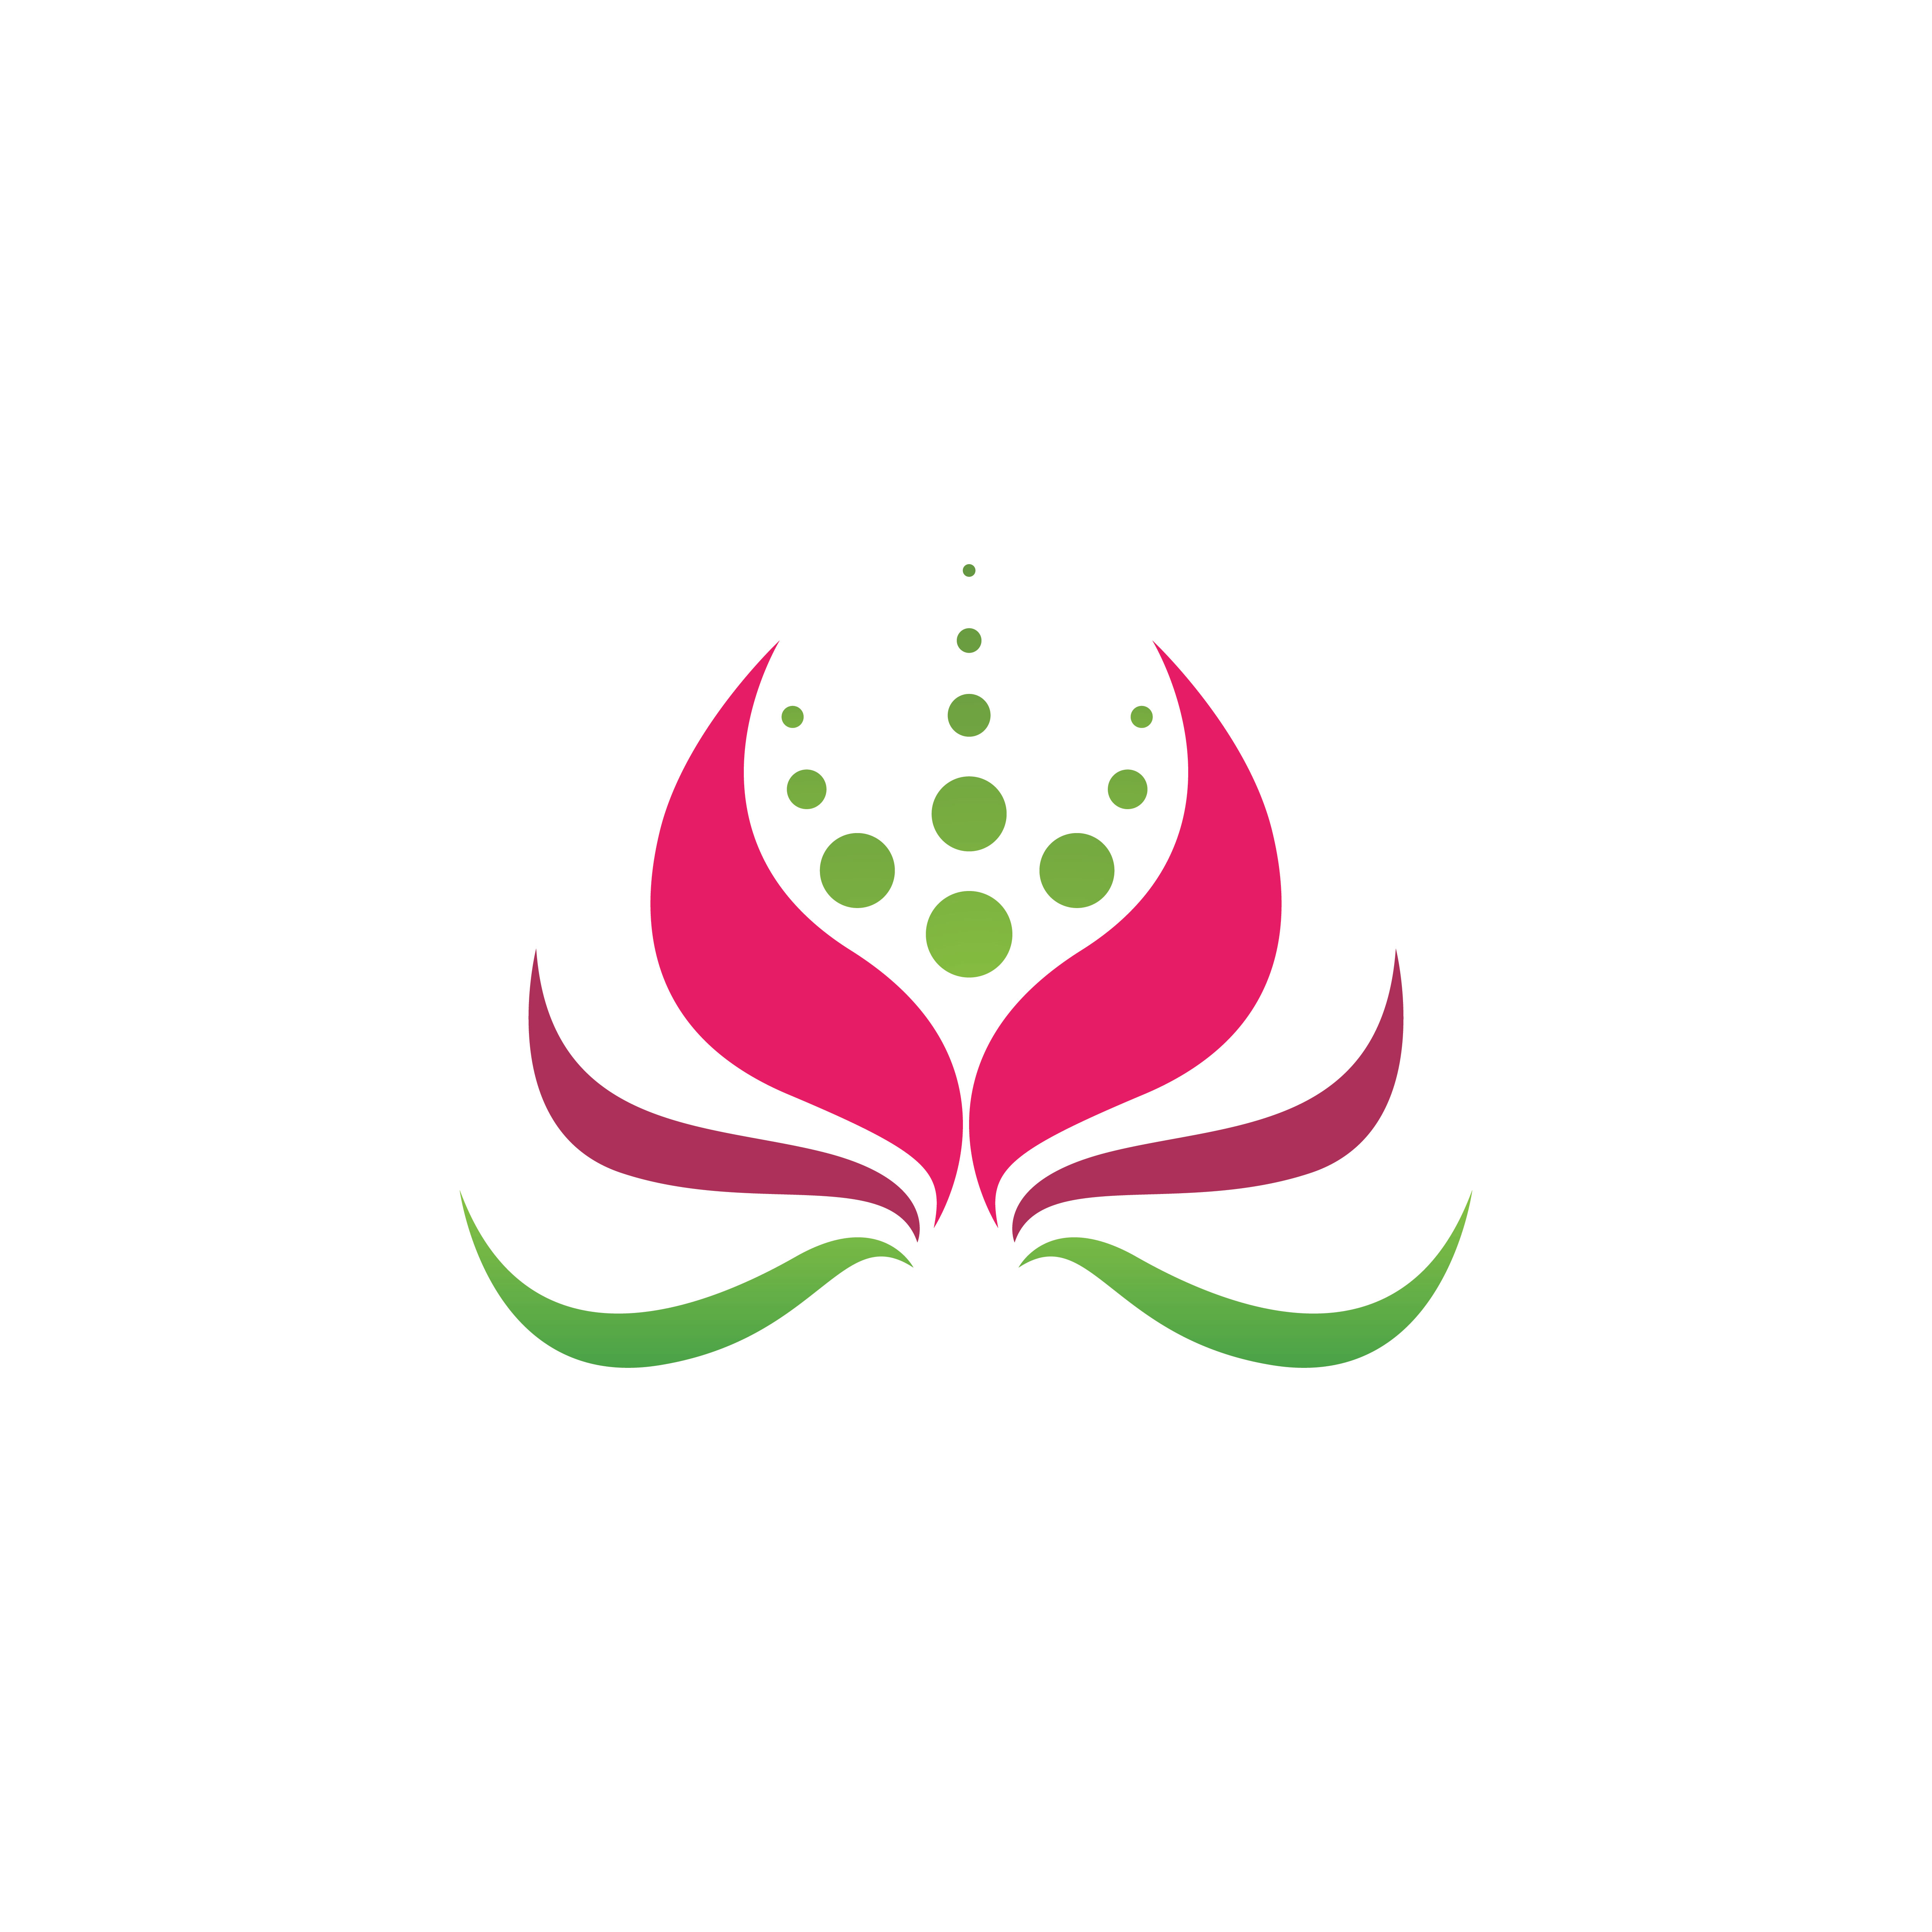 Colorful Lotus Logo Design cover image.